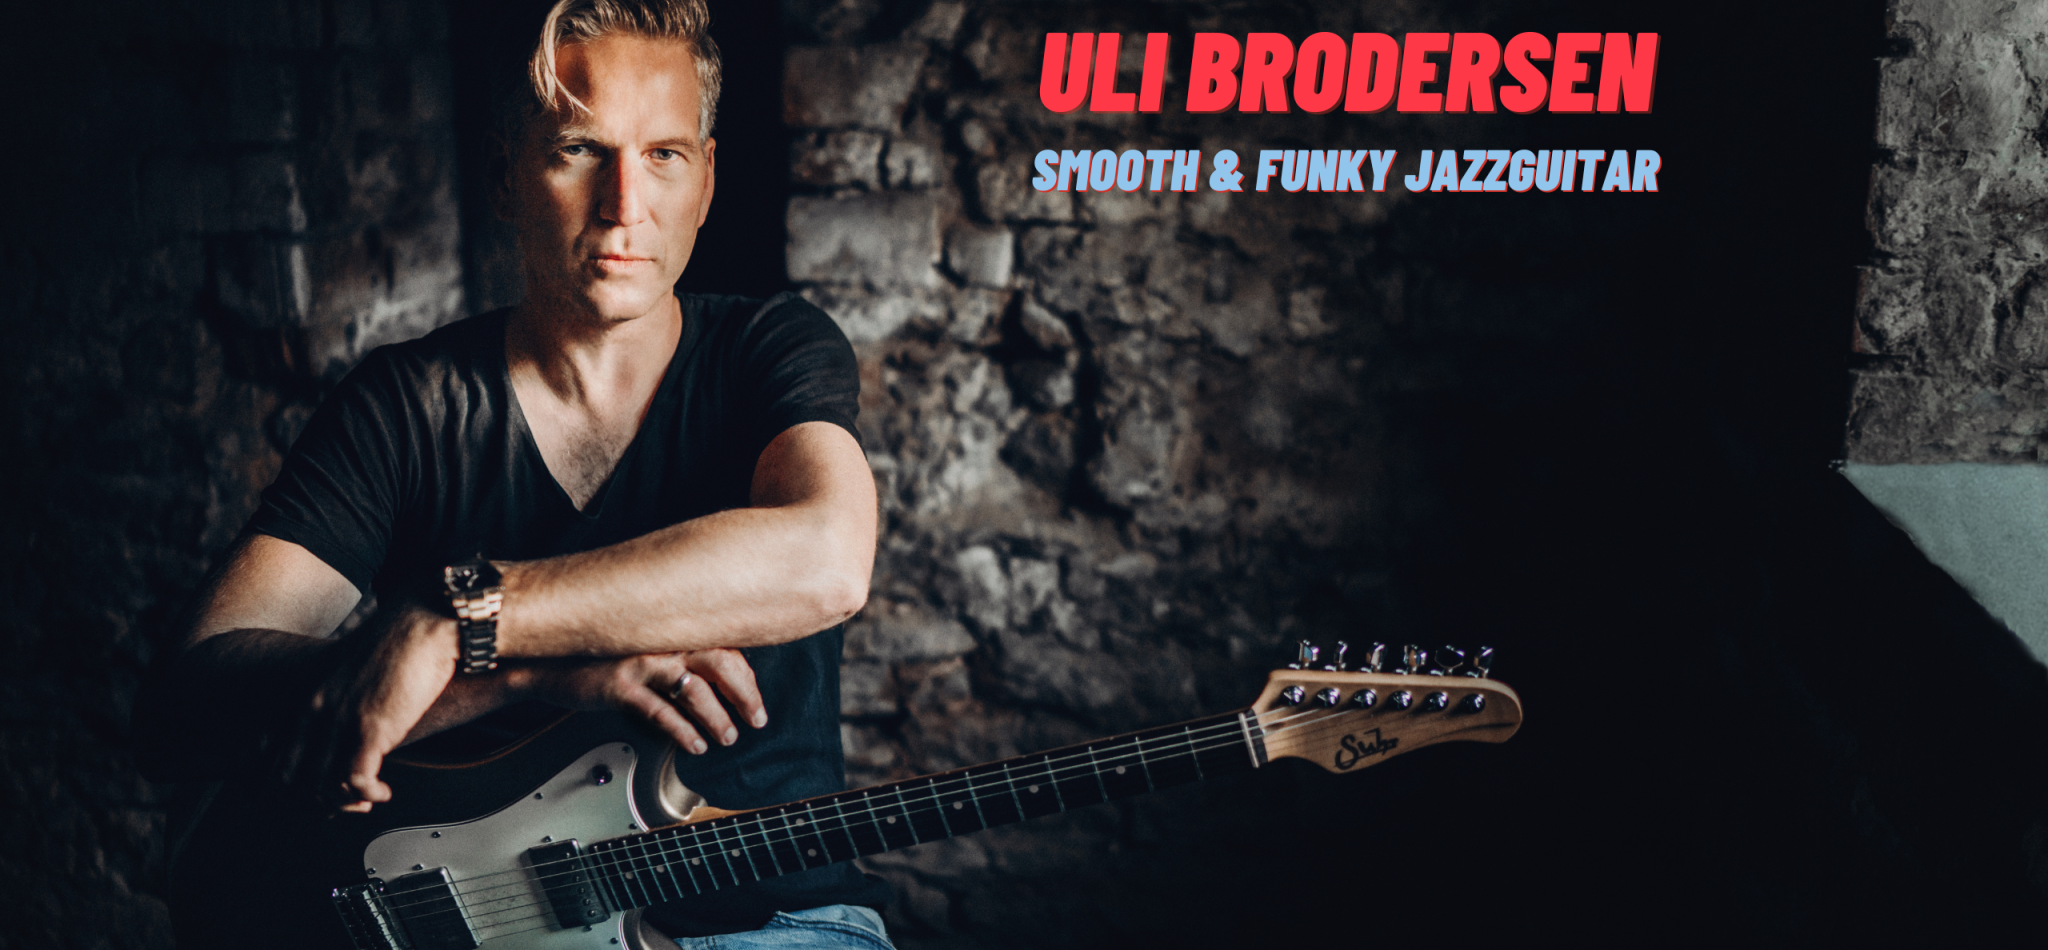 Uli Brodersen guitarist&composer-2